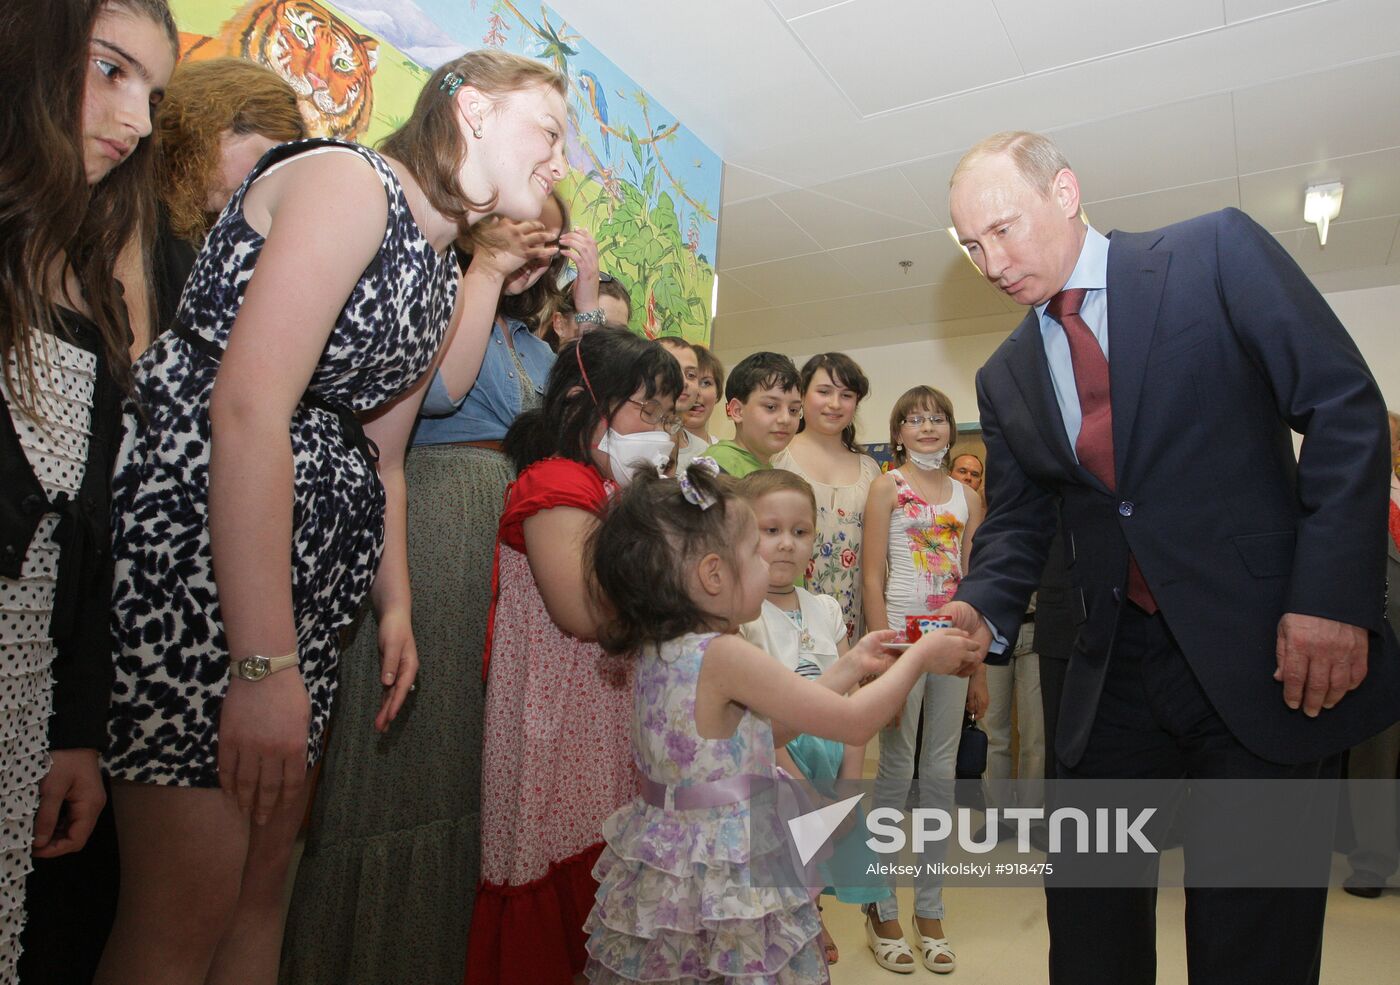 Vladimir Putin attends opening of children's medical center